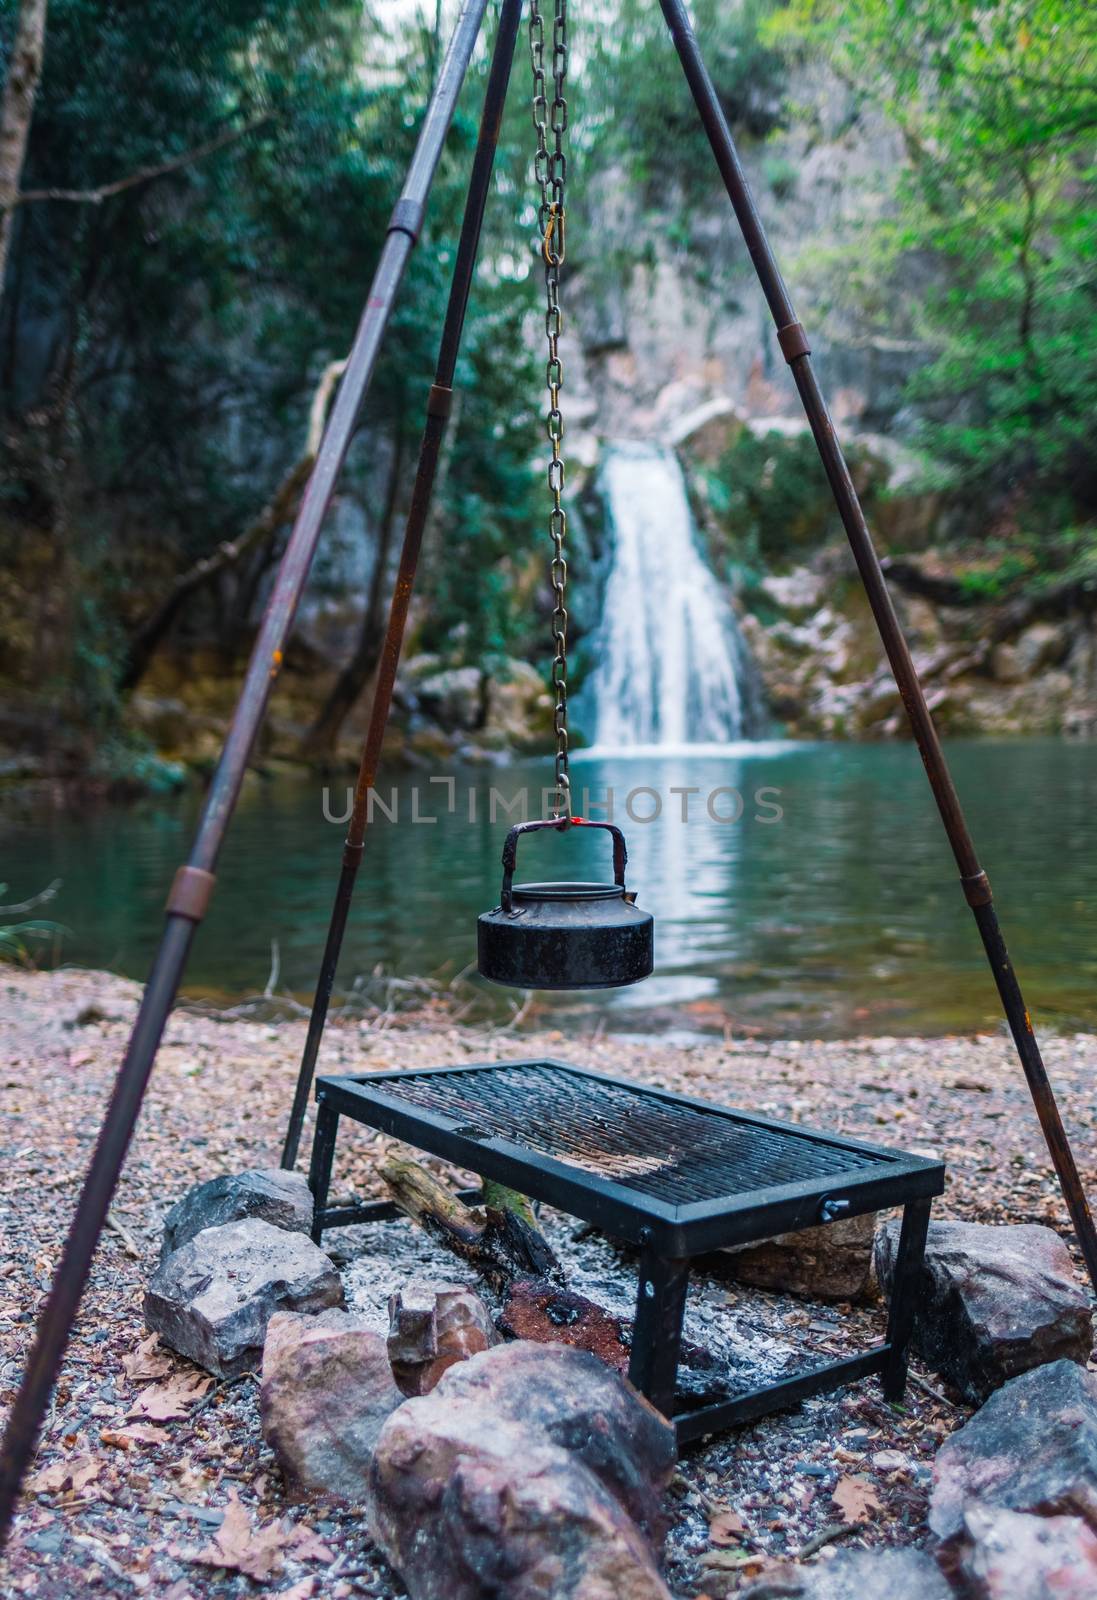 Vintage black teapot hanging over campfire by waterfall in Eksili, Antalya, Turkey.